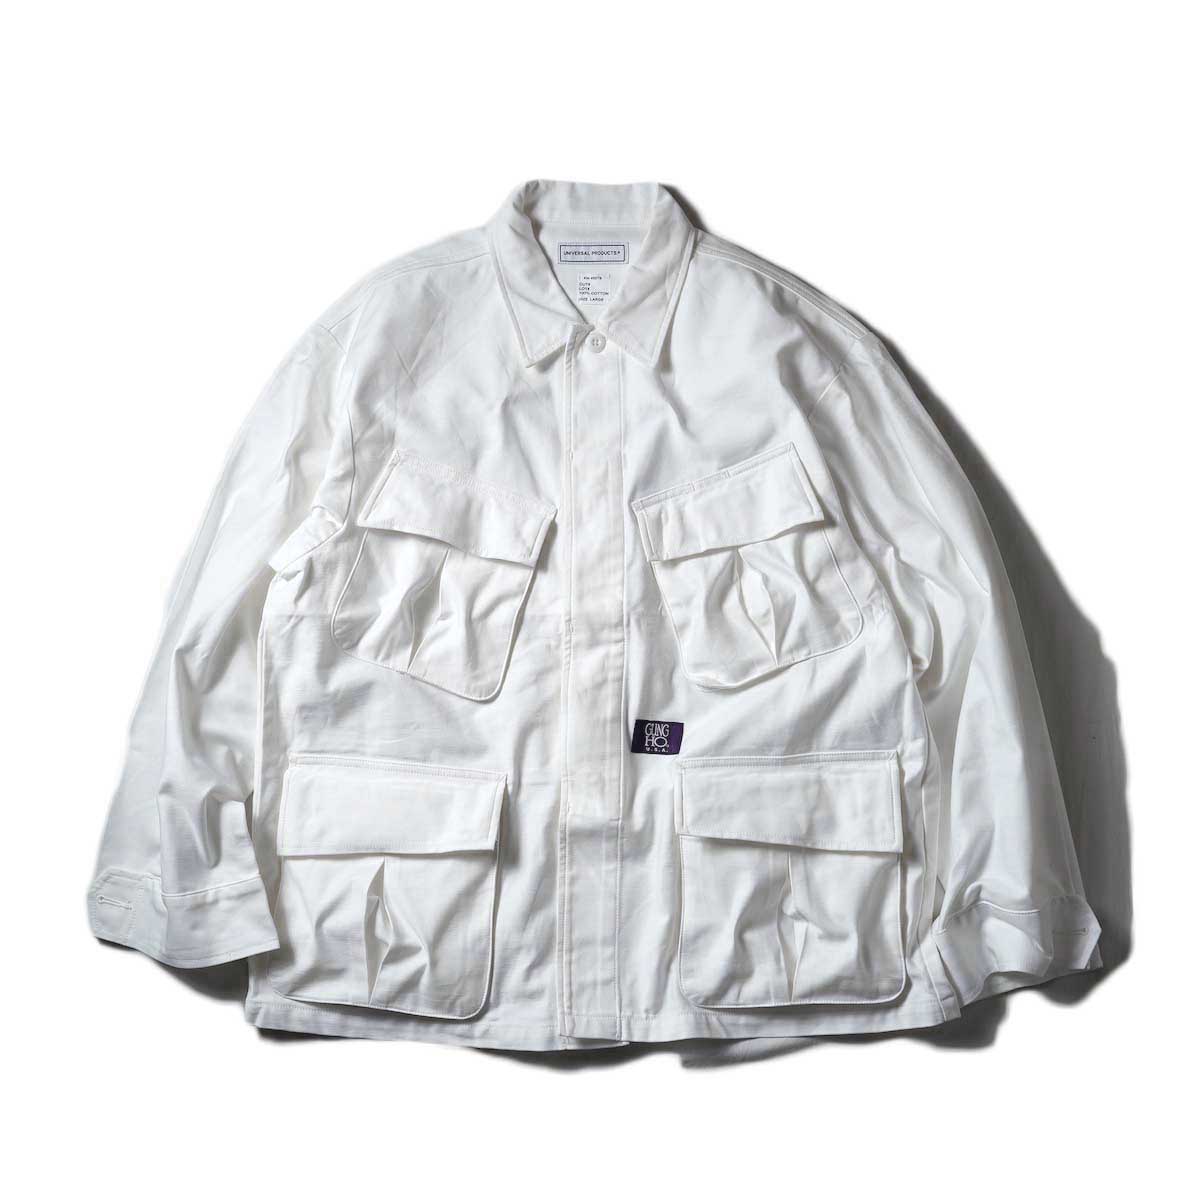 UNIVERSAL PRODUCTS / Gung Ho Fatigue Jacket (Ivory)